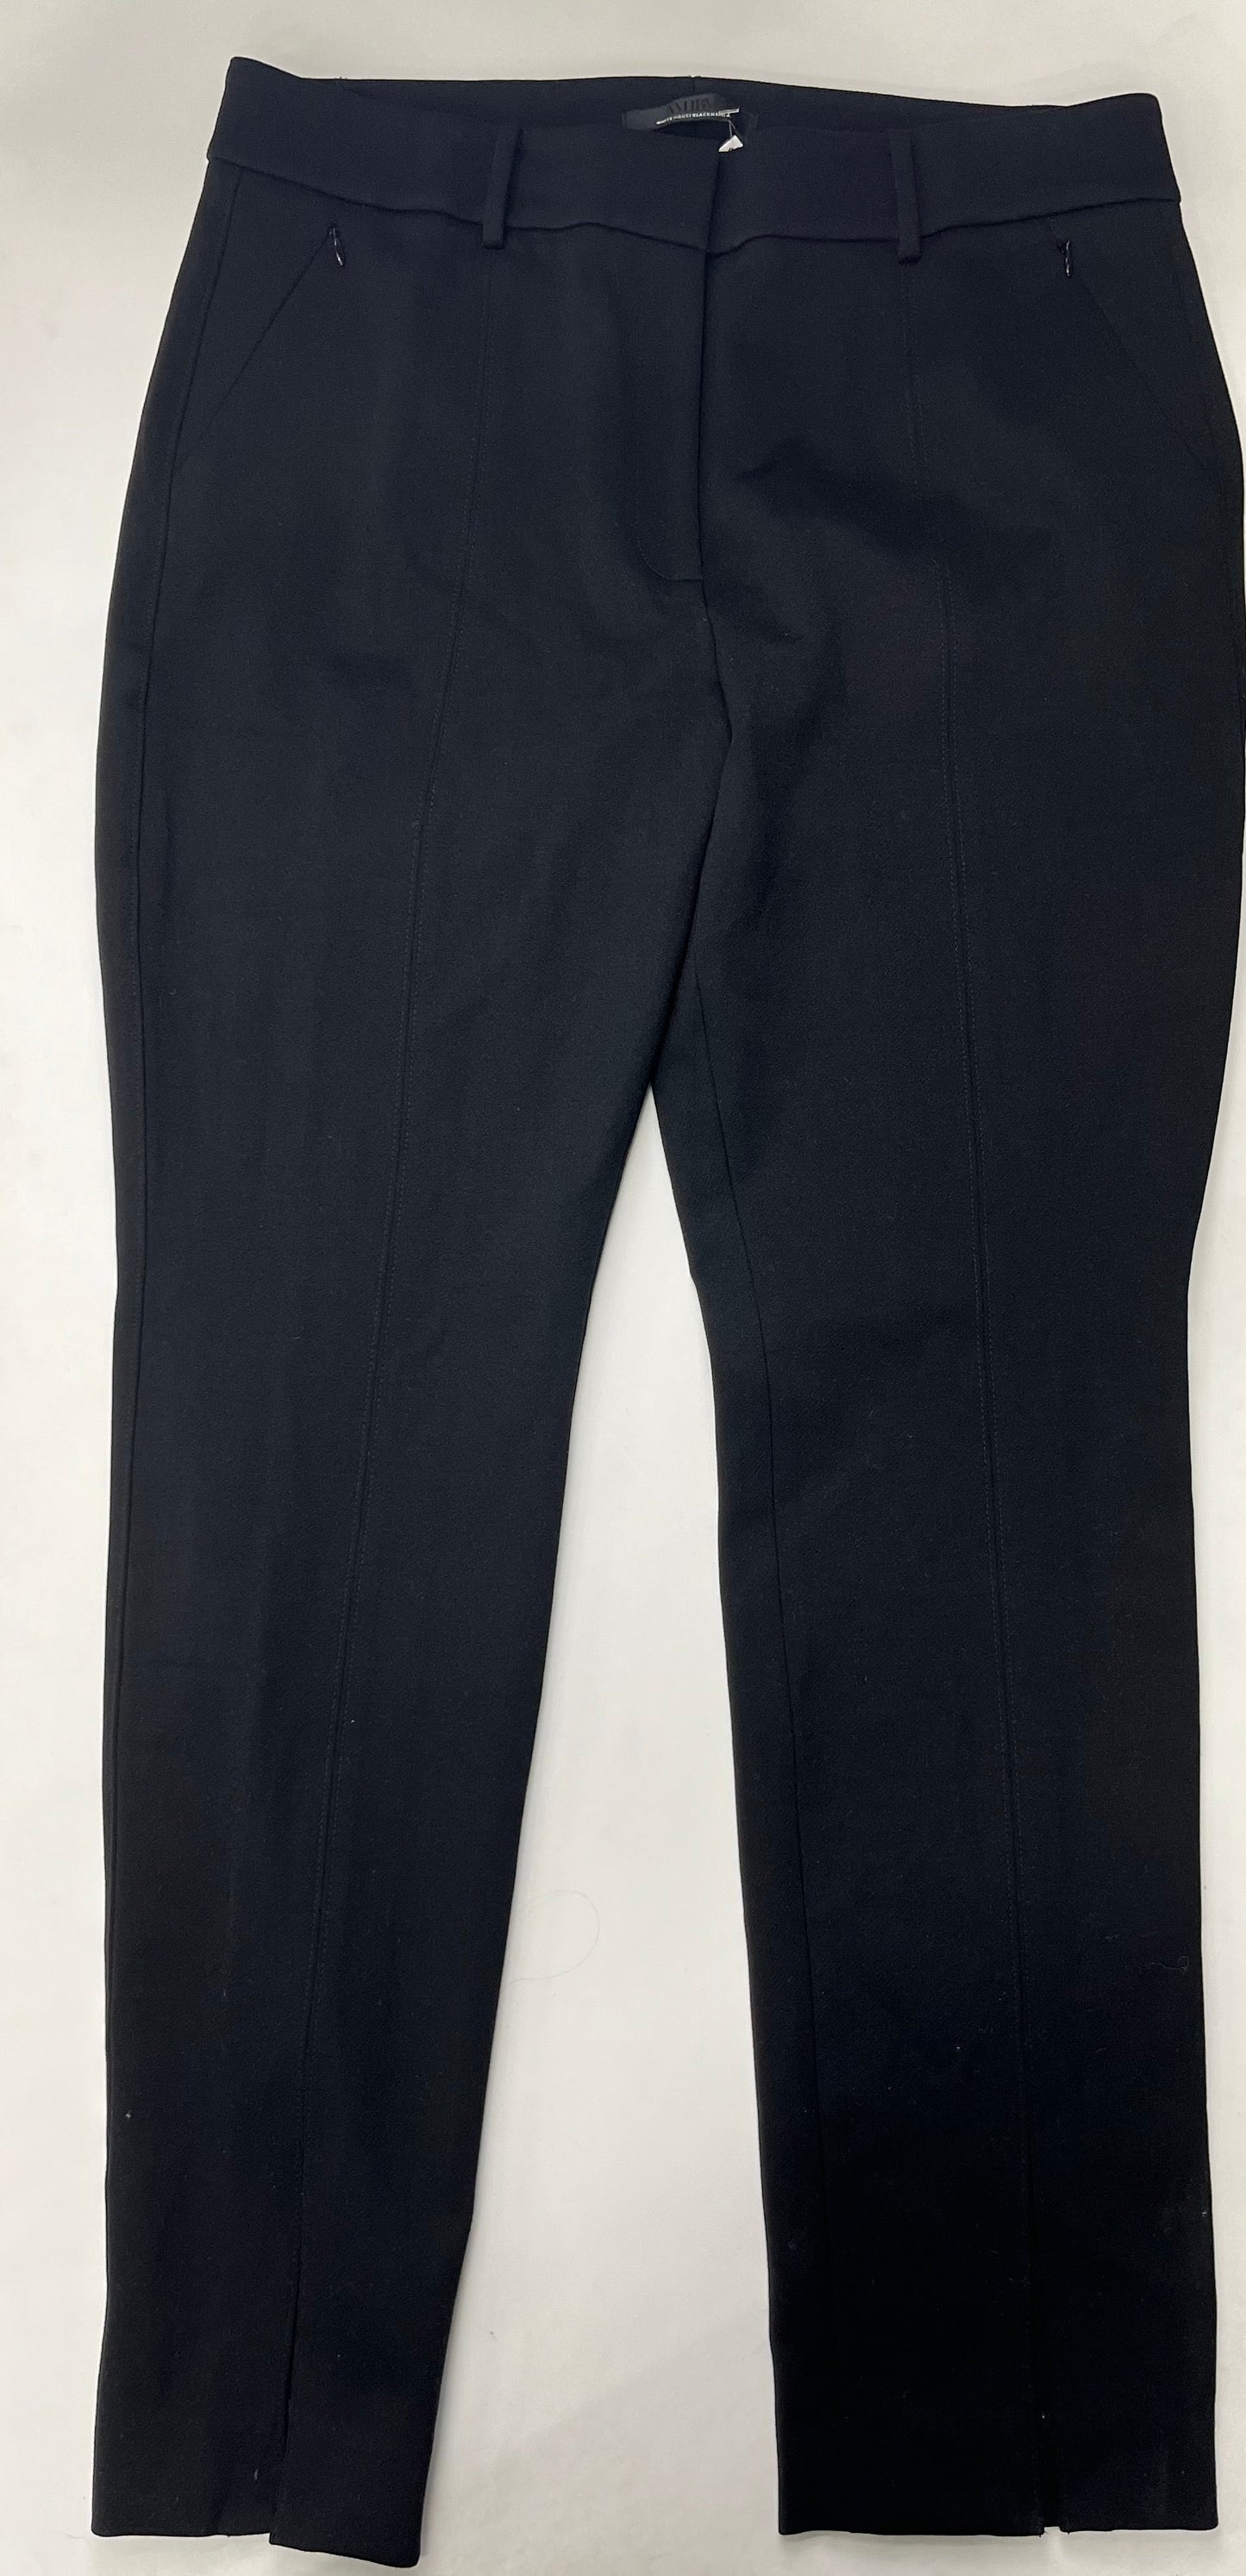 Pants Work/dress By White House Black Market Size: 4